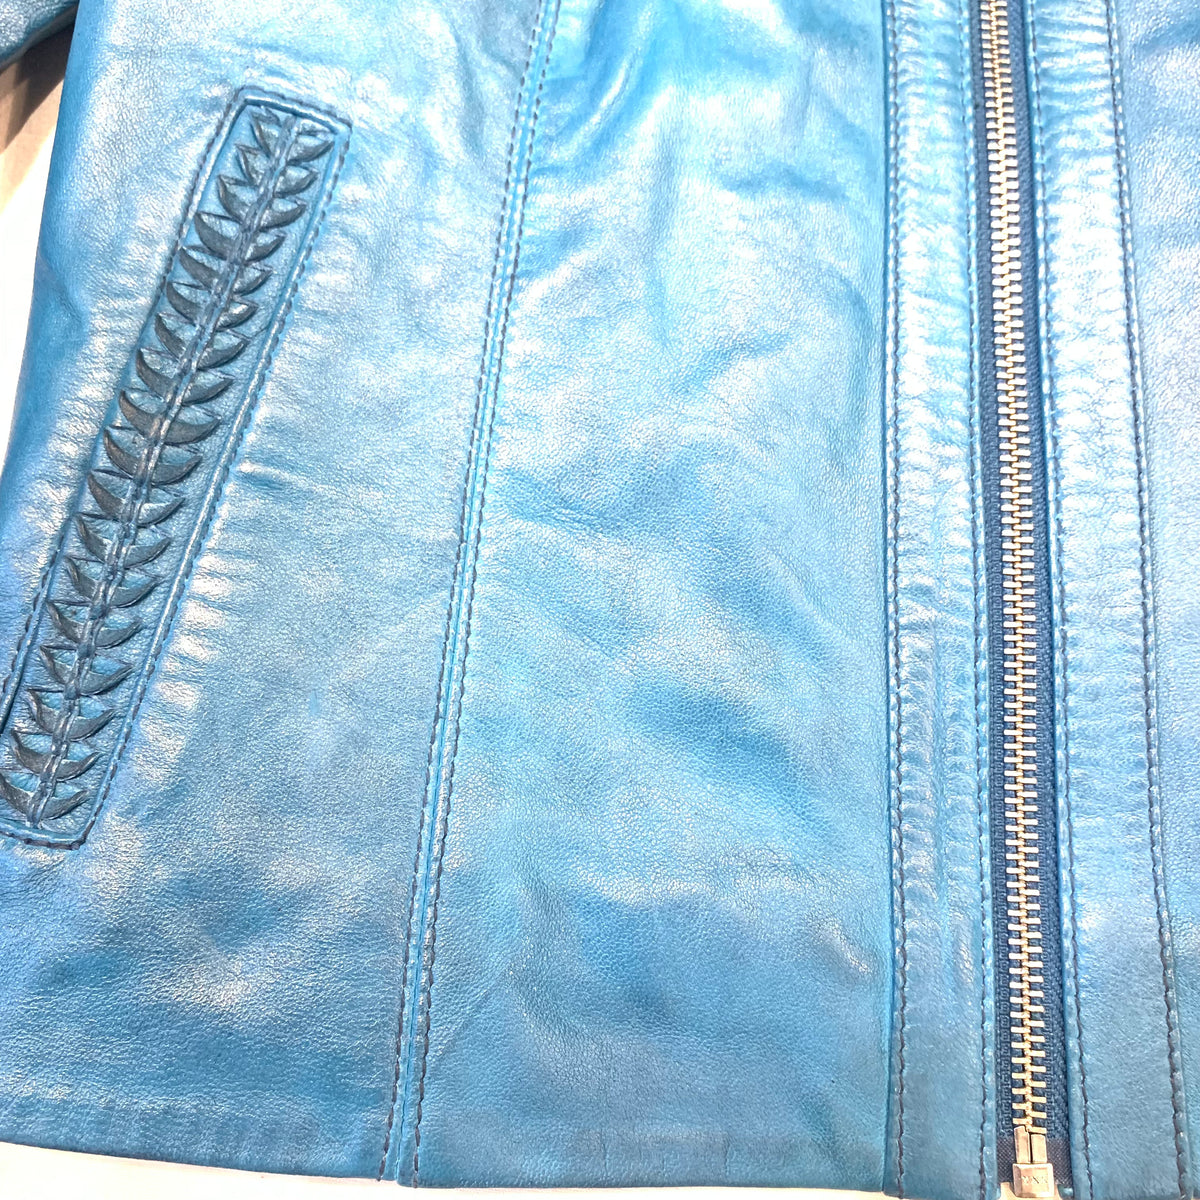 Scully Ladies Western Ocean Blue Lambskin Jacket - Dudes Boutique